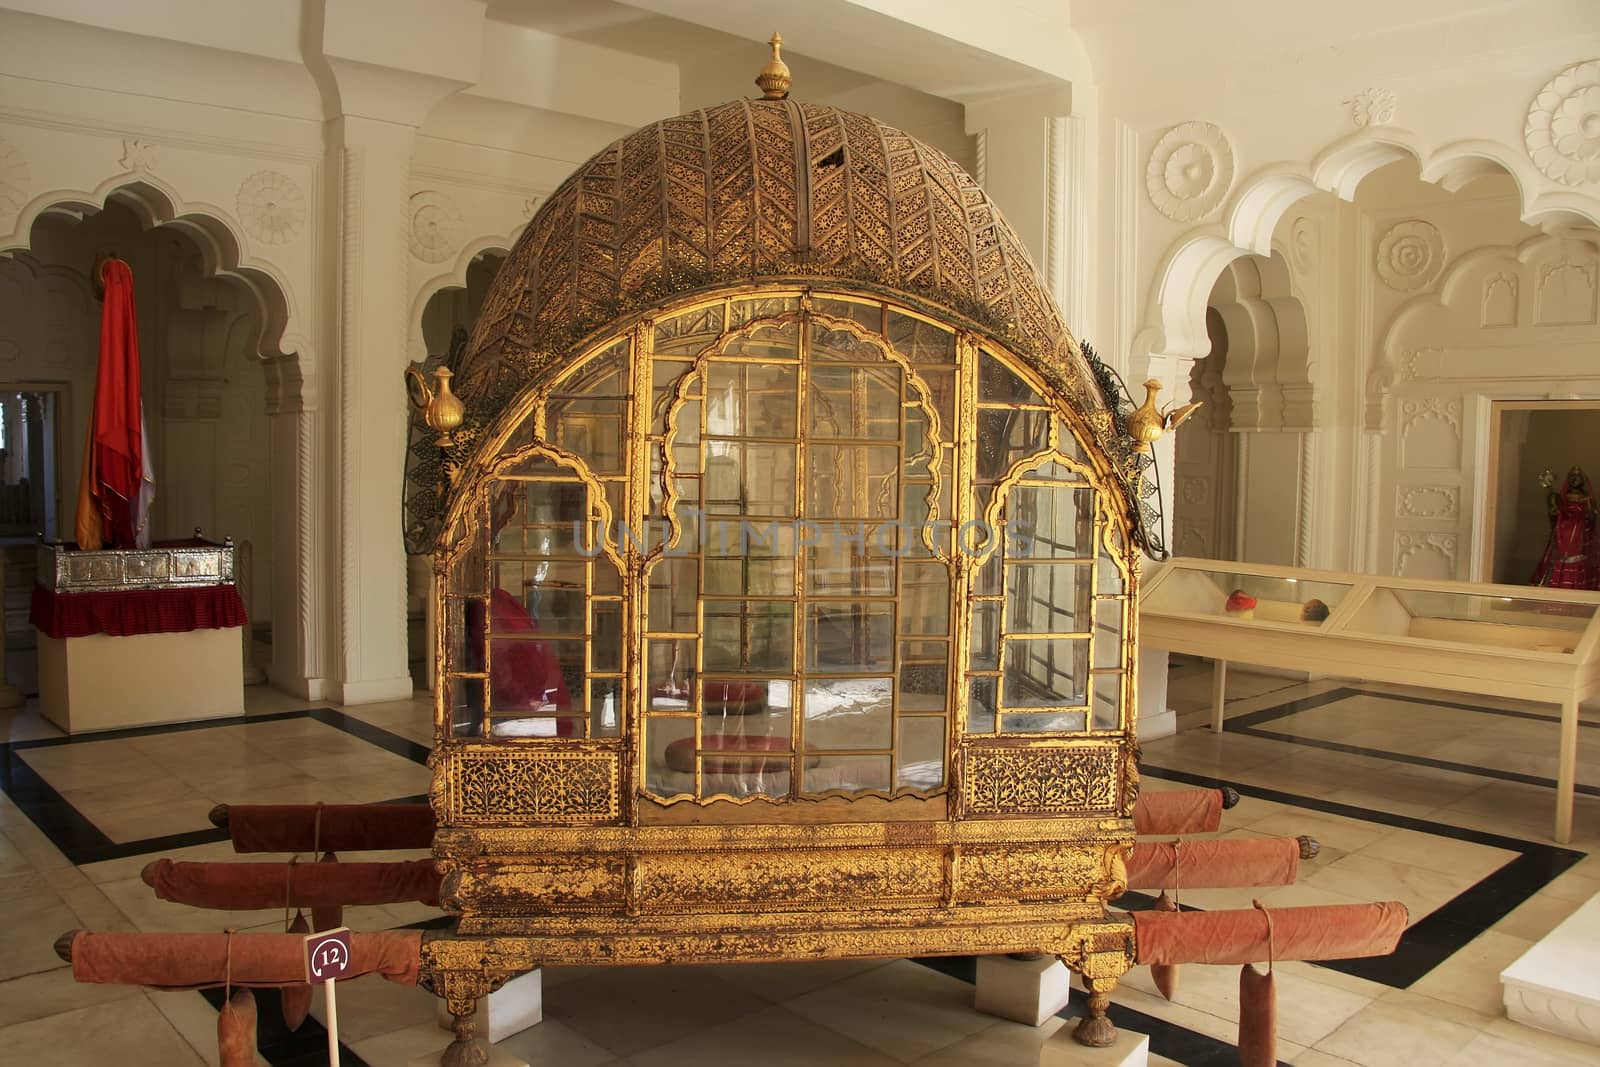 Palanquin on display at Mehrangarh Fort museum, Jodhpur, India by donya_nedomam